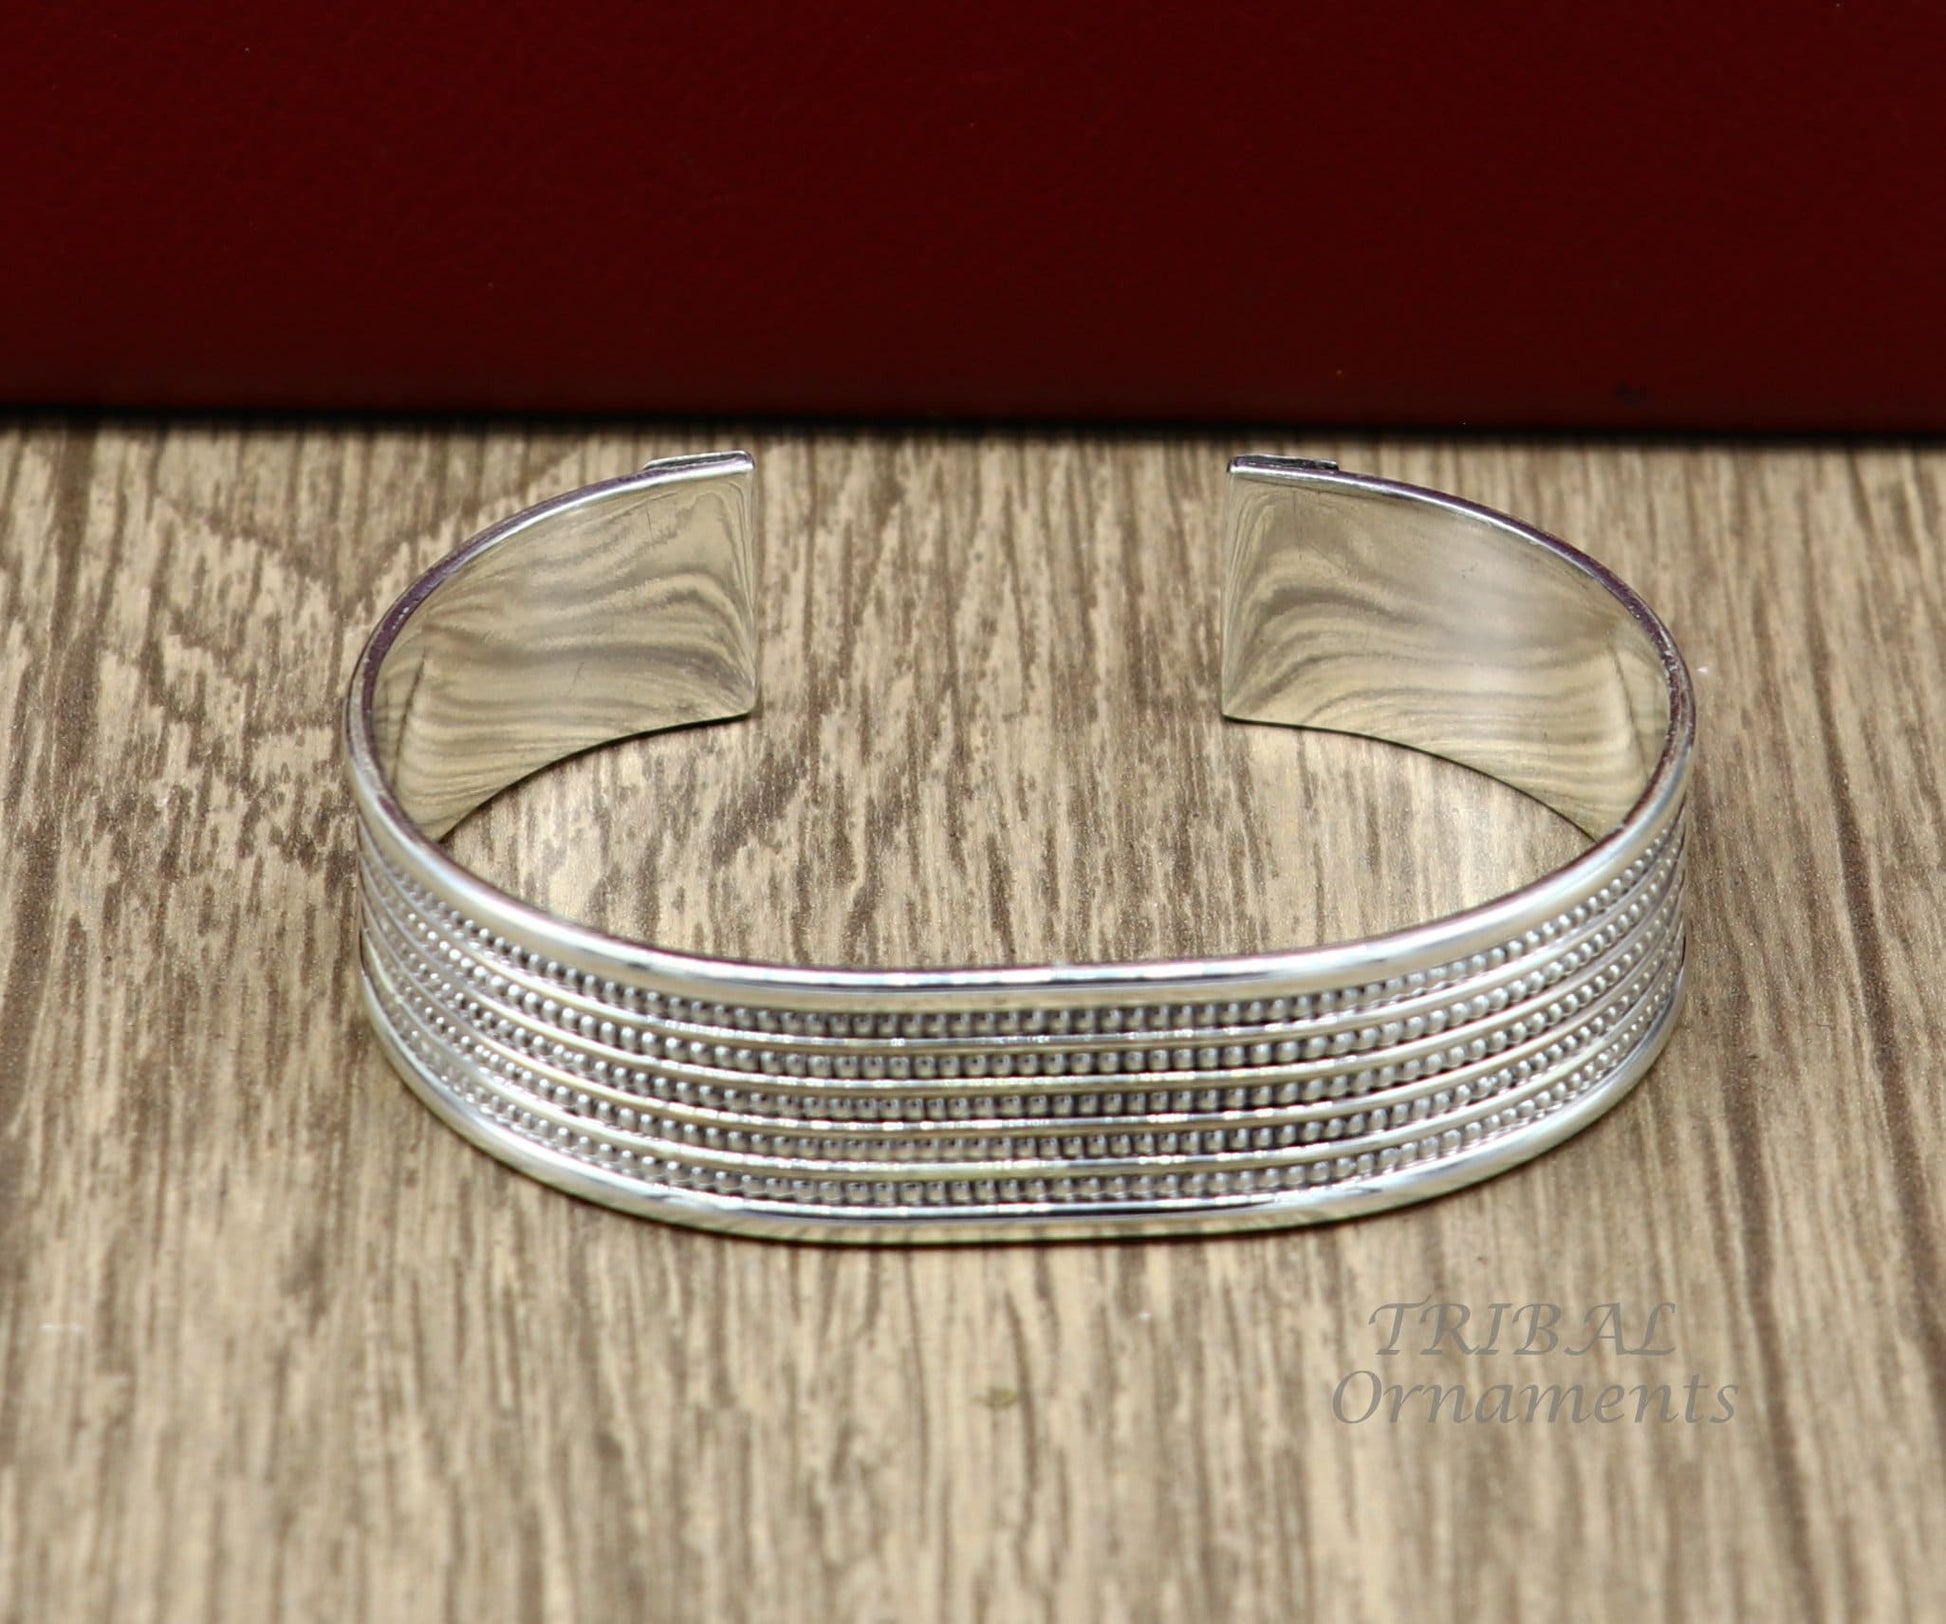 925 sterling silver handmade adjustable open face kada bangle cuff bracelet, elegant unisex personalized gifting cuff jewelry cuff143 - TRIBAL ORNAMENTS